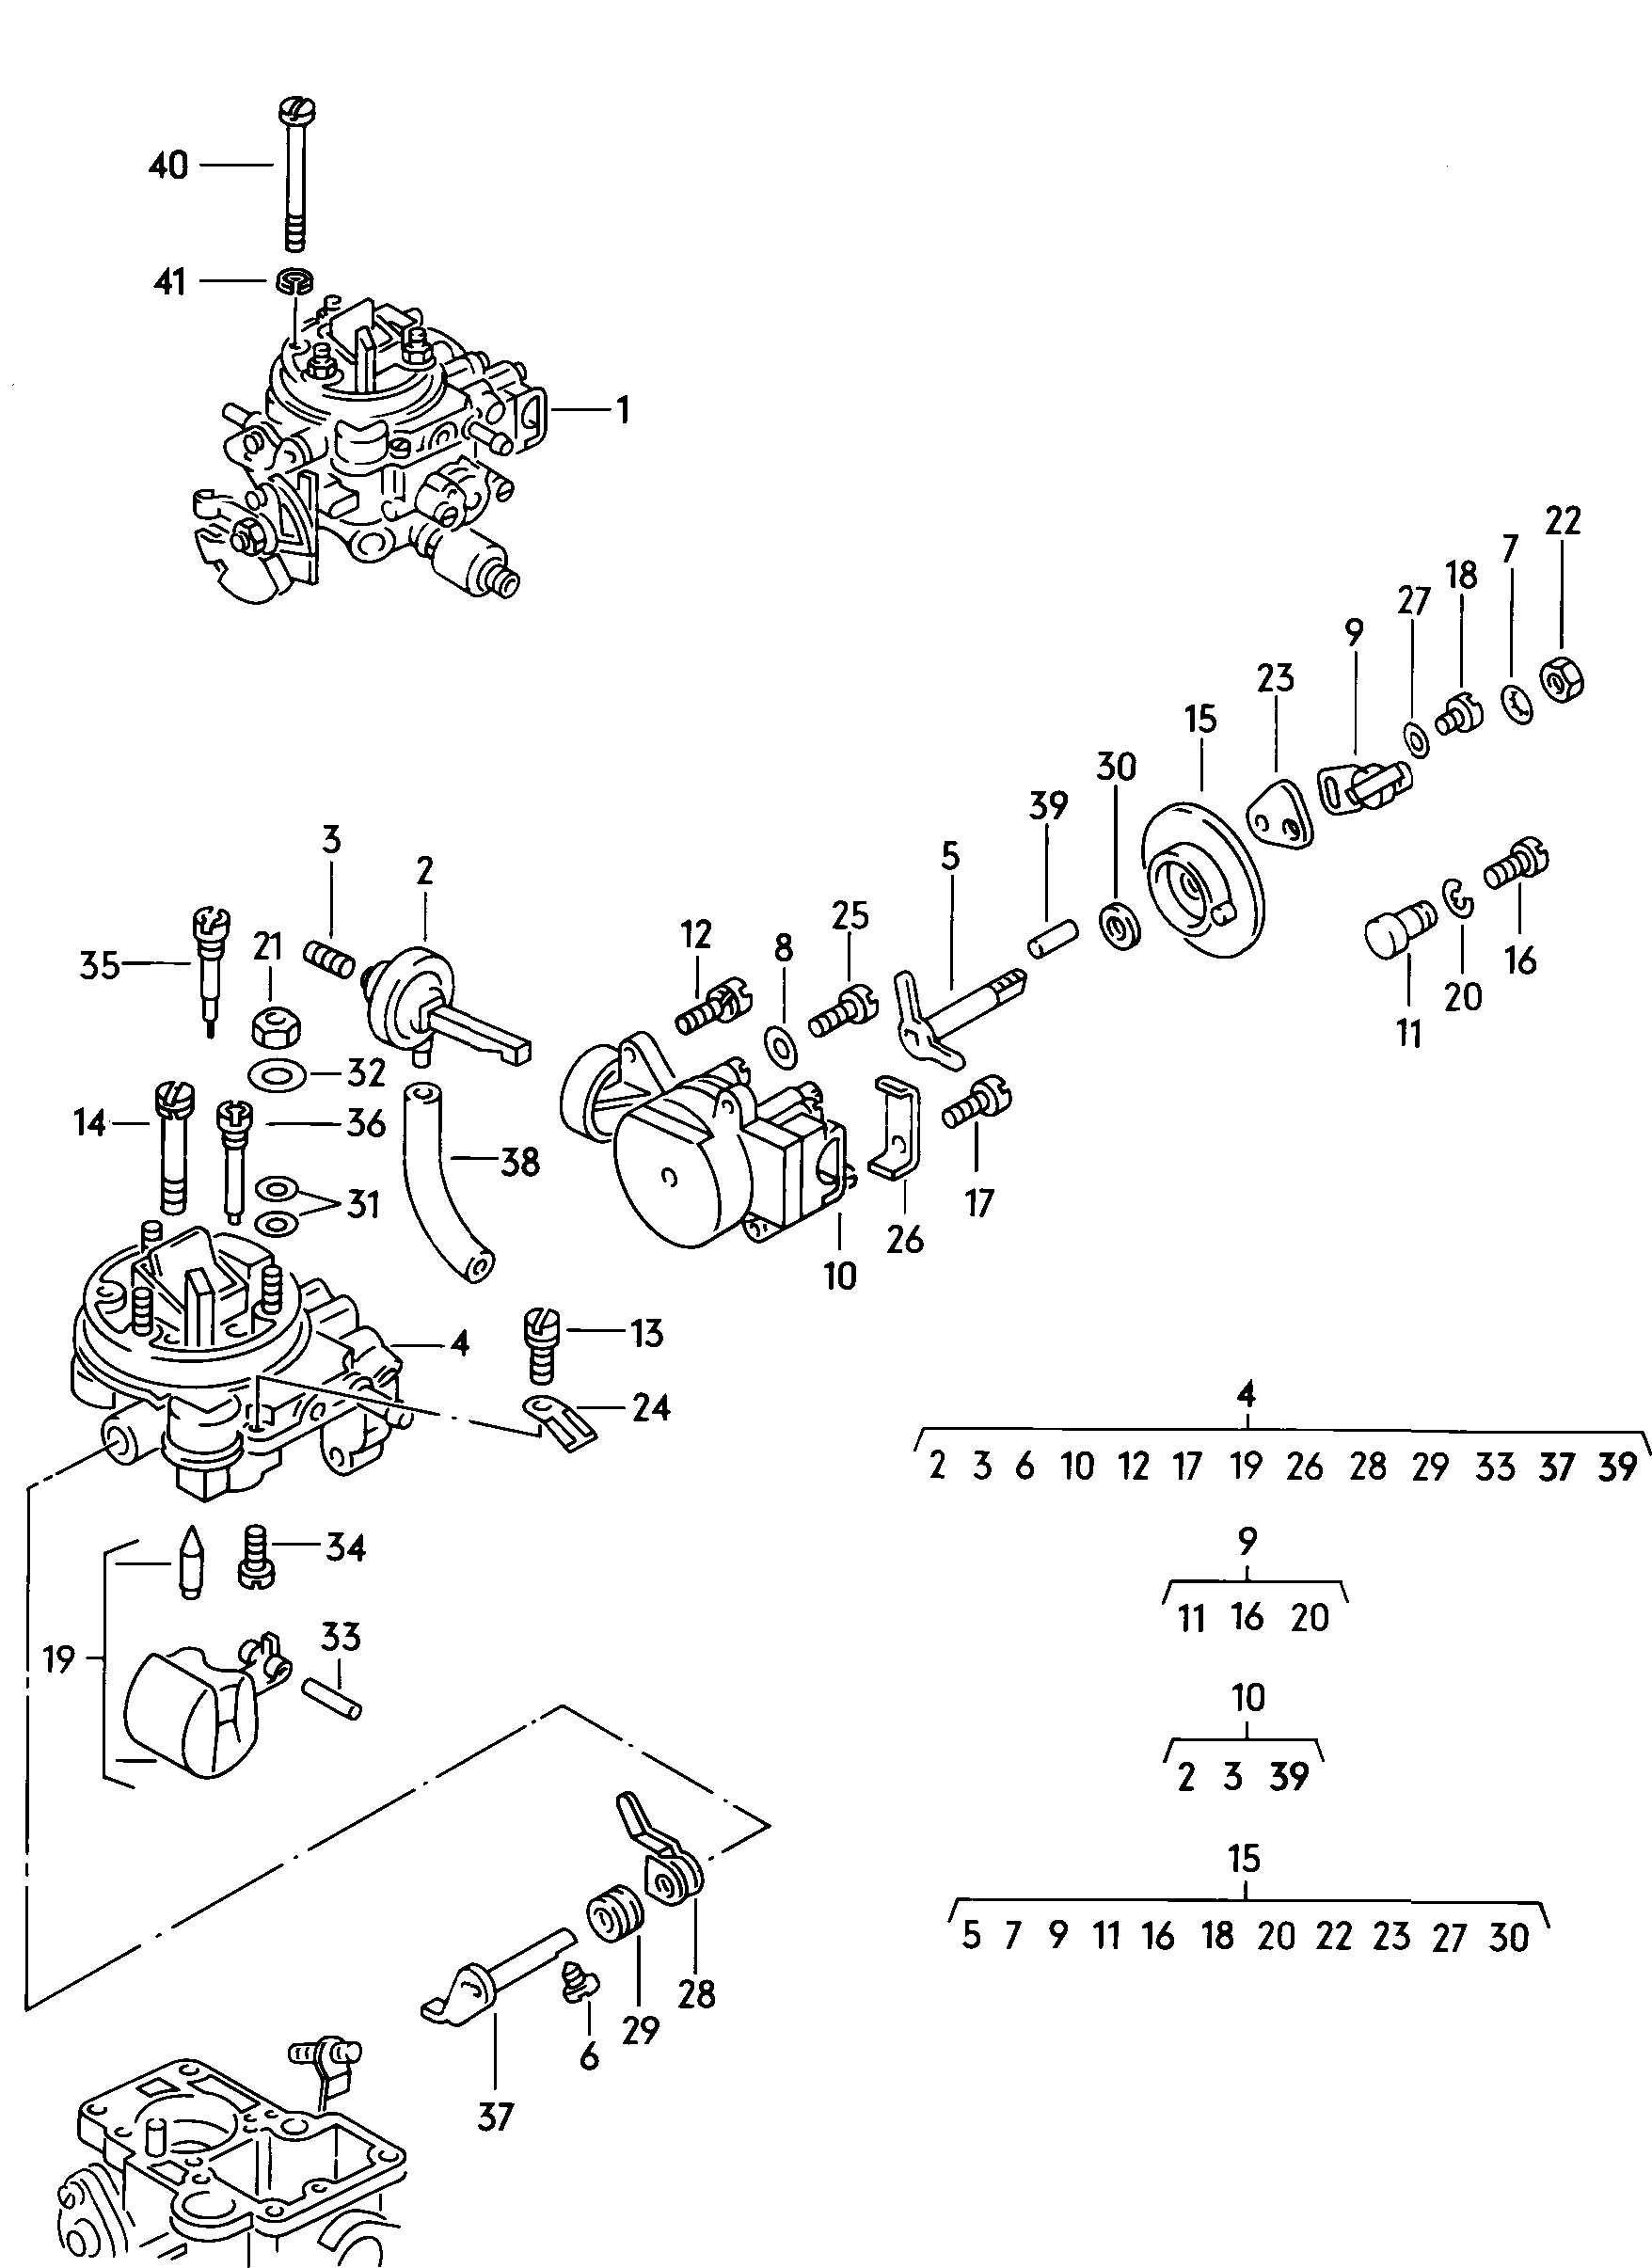 Karburatör muhafaza üst parç - Mod.181 / Iltis(ILT)  